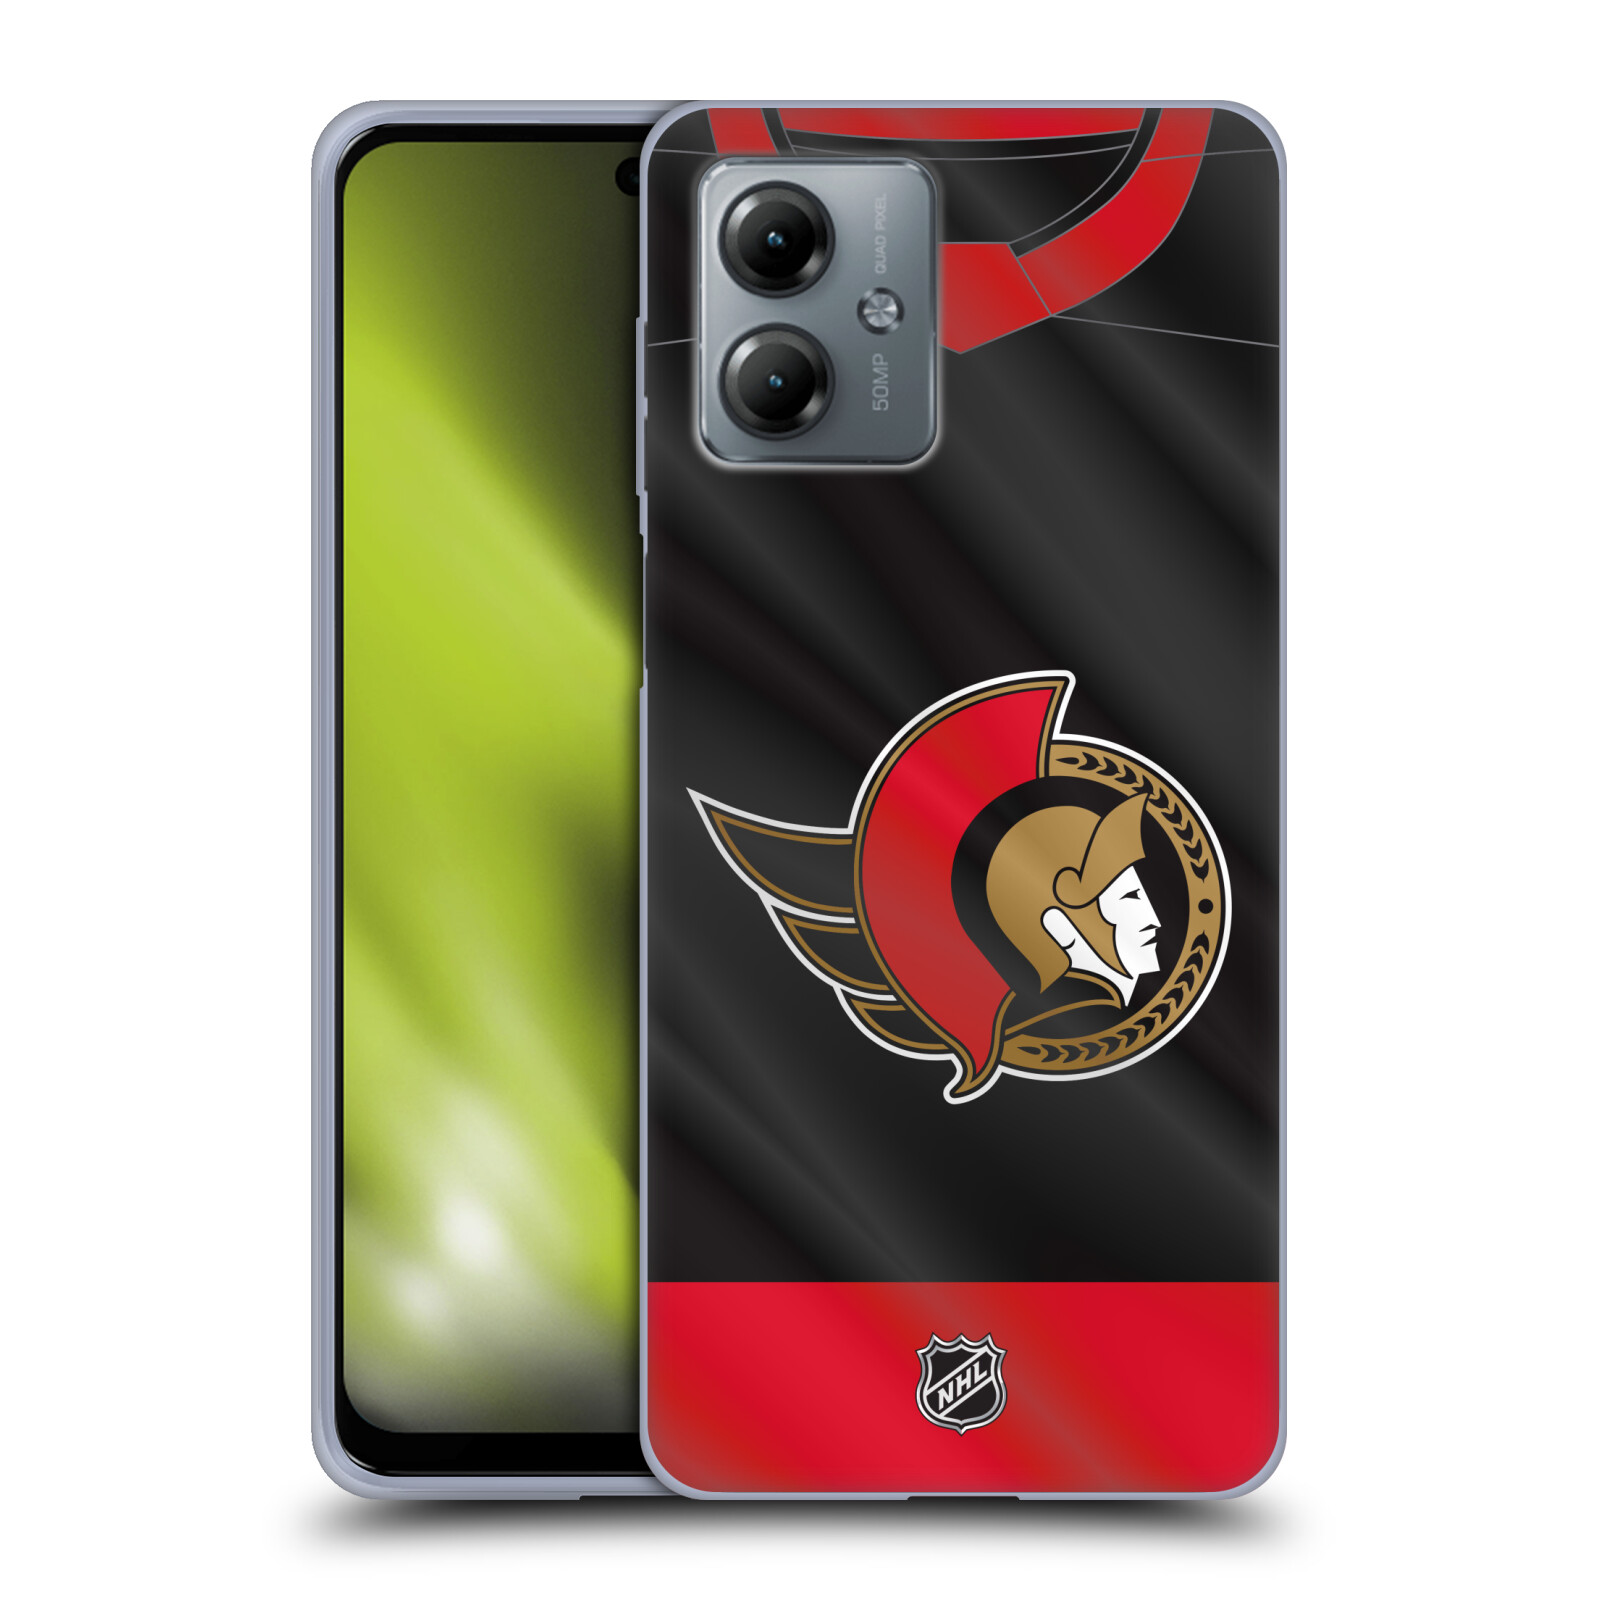 Silikonové pouzdro na mobil Motorola Moto G14 - NHL - Dres Ottawa Senators (Silikonový kryt, obal, pouzdro na mobilní telefon Motorola Moto G14 s licencovaným motivem NHL - Dres Ottawa Senators)